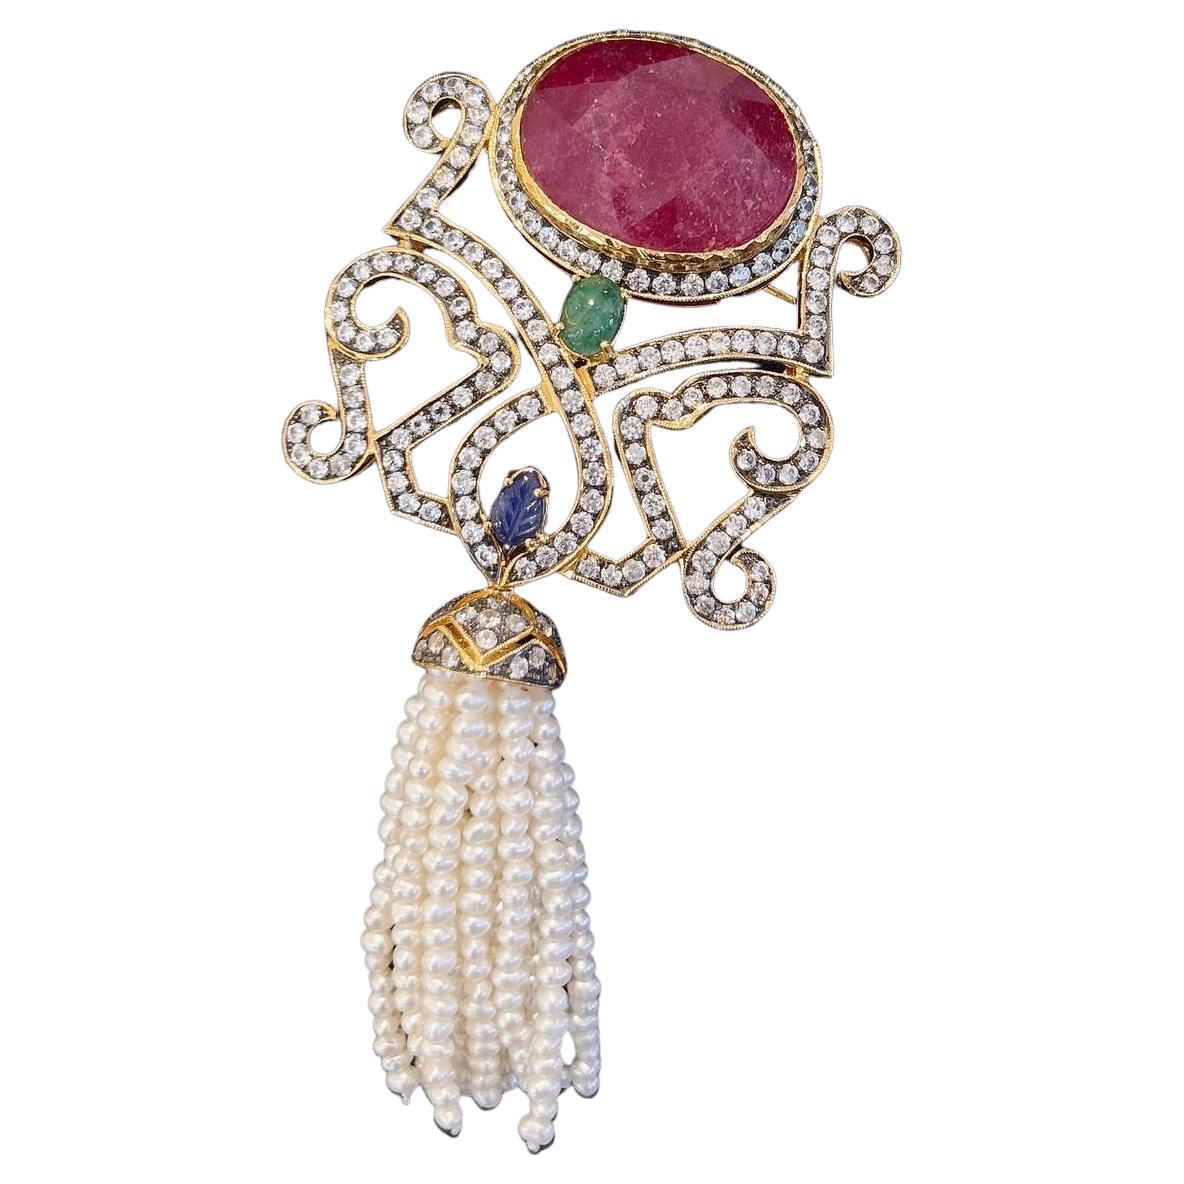 Bochic “Orient” Red Ruby, Emerald & Sapphire Brooch Set in 22k Gold & Silver